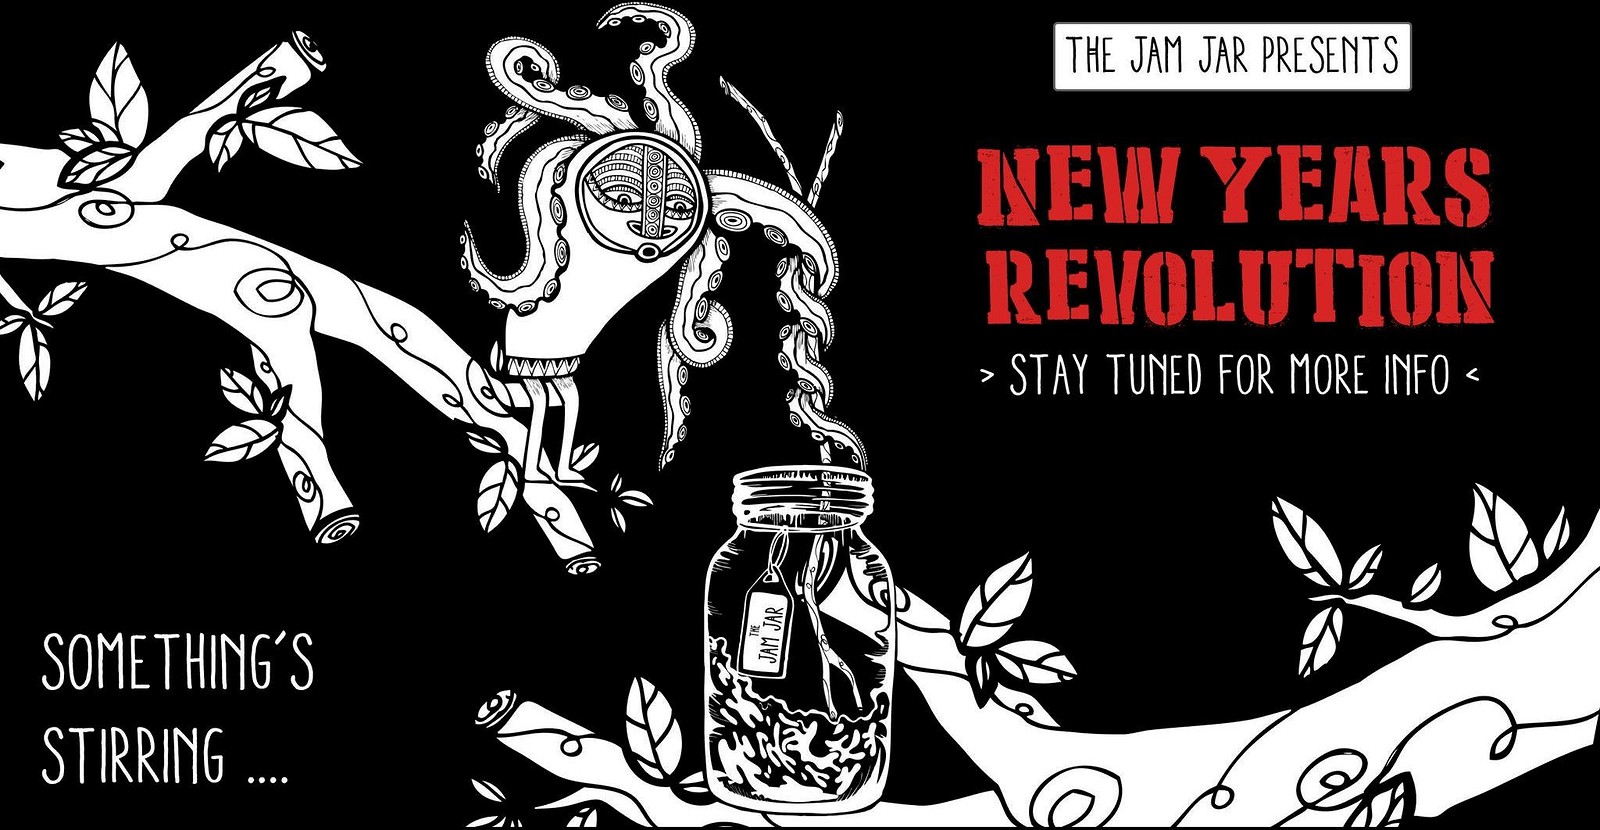 The New Years Revolution - Viva La Jam Jar at Jam Jar